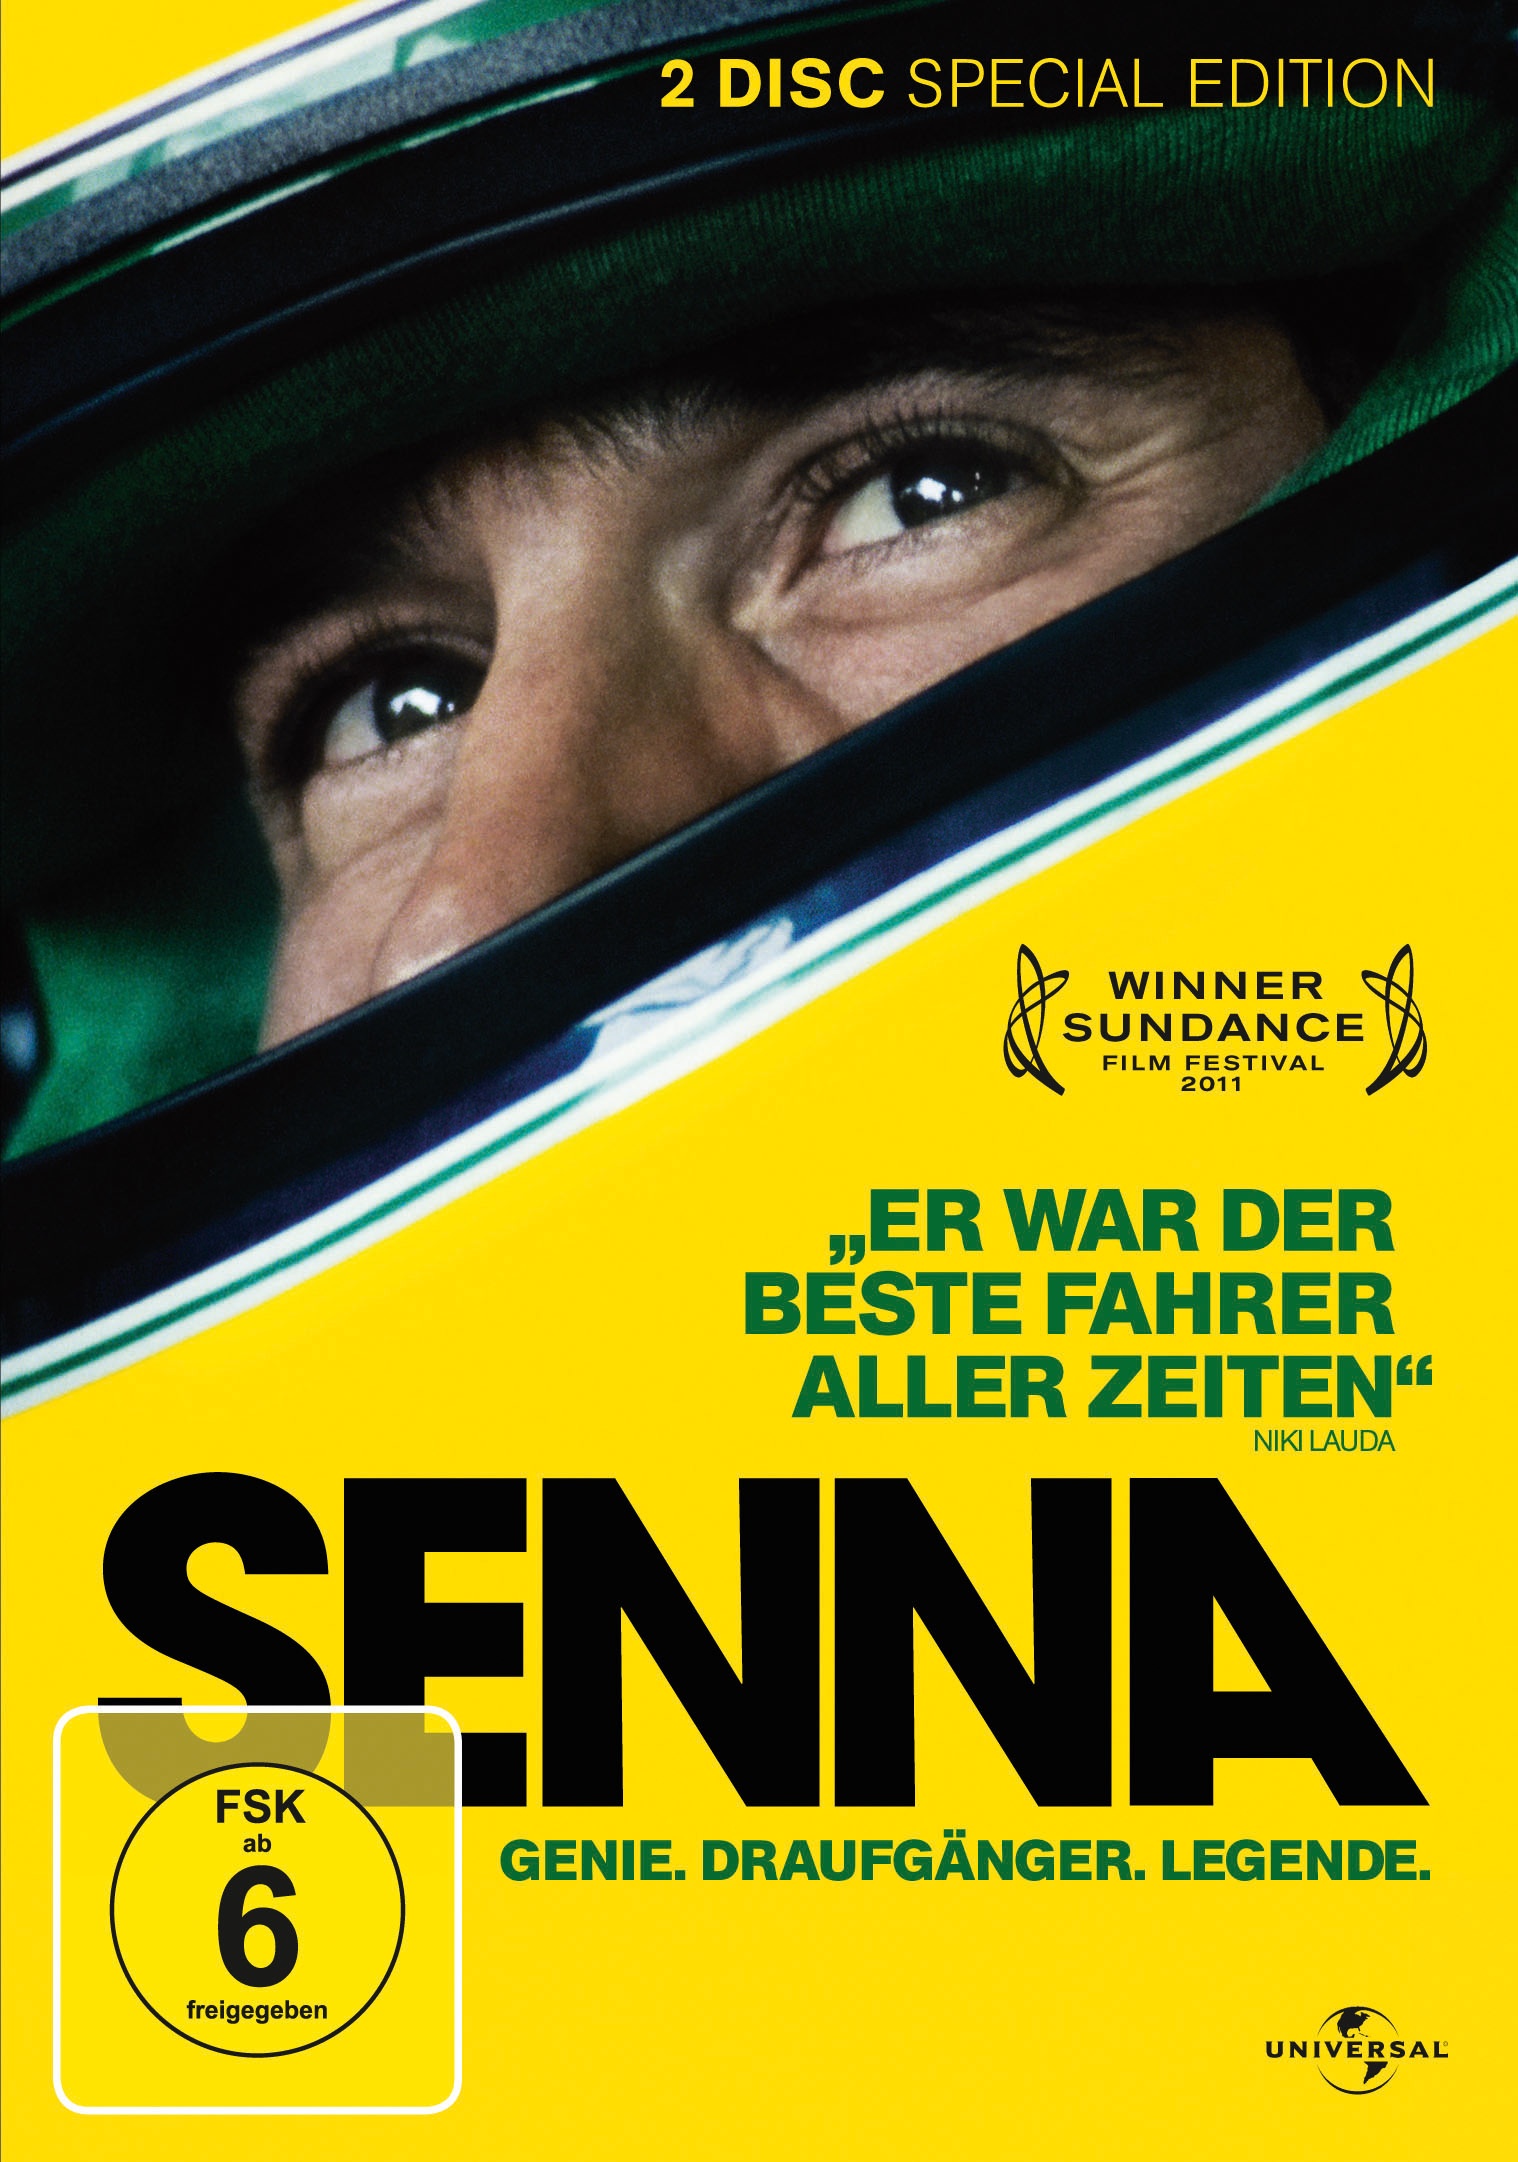 Senna (DVD)